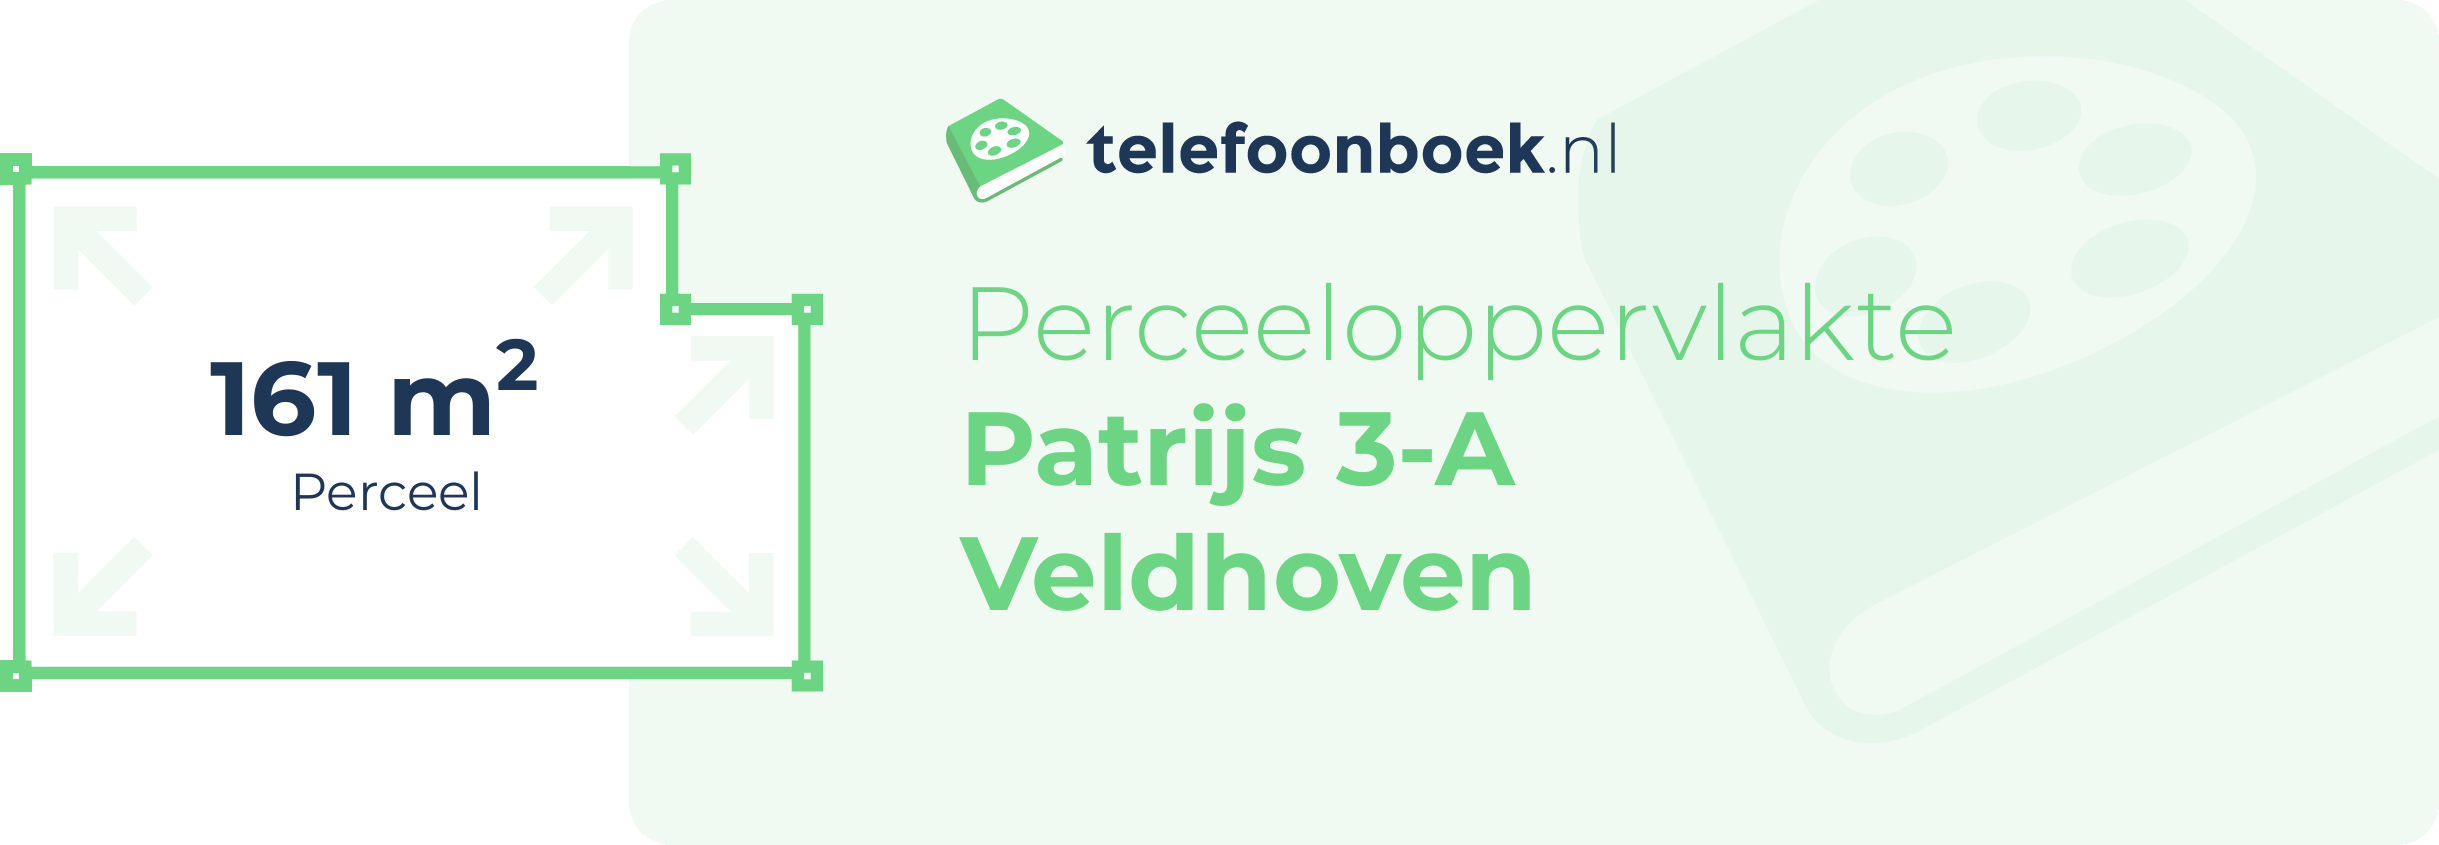 Perceeloppervlakte Patrijs 3-A Veldhoven